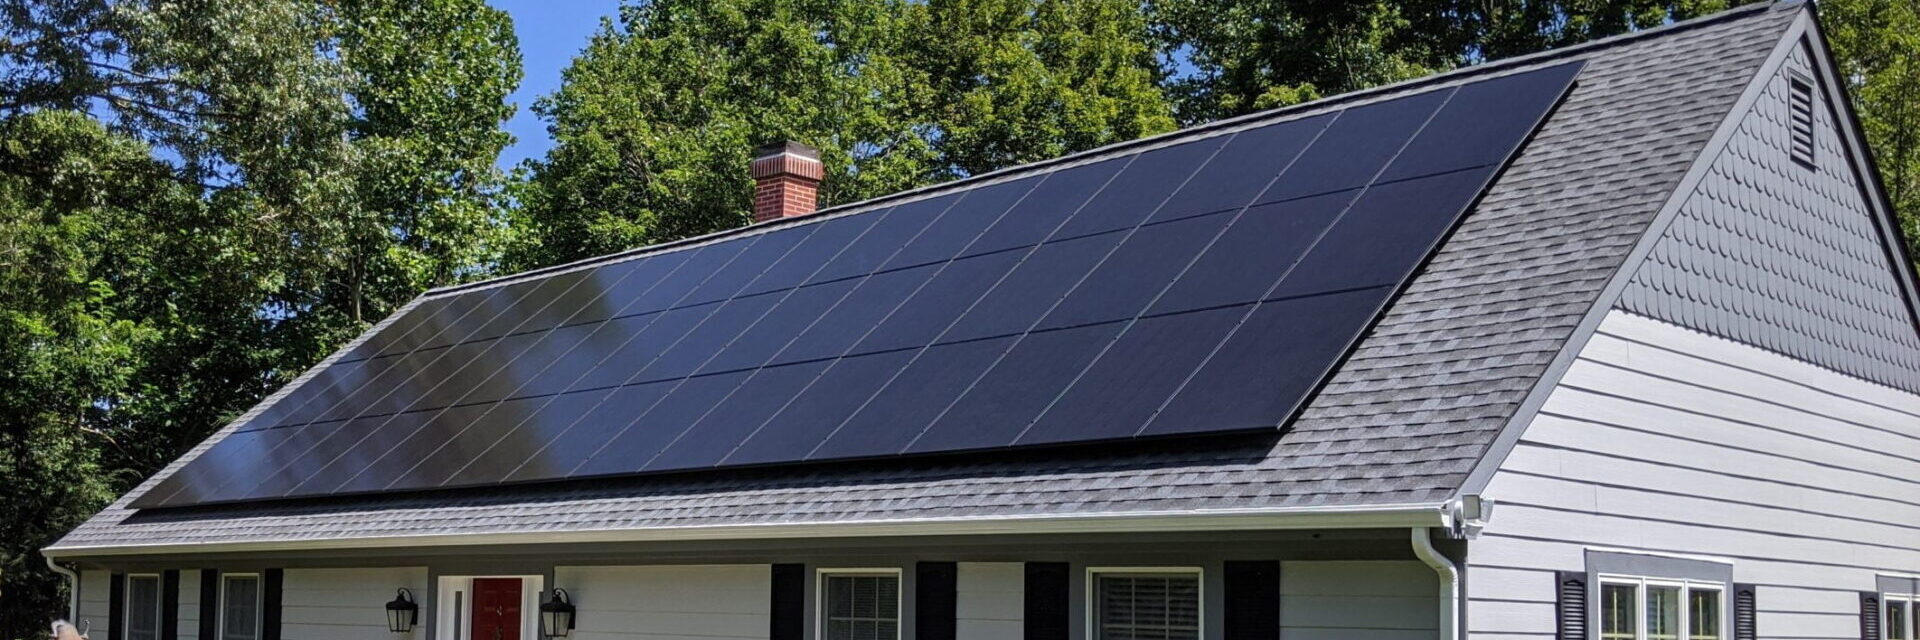 Rooftop solar panels on home in Waynesboro Virginia